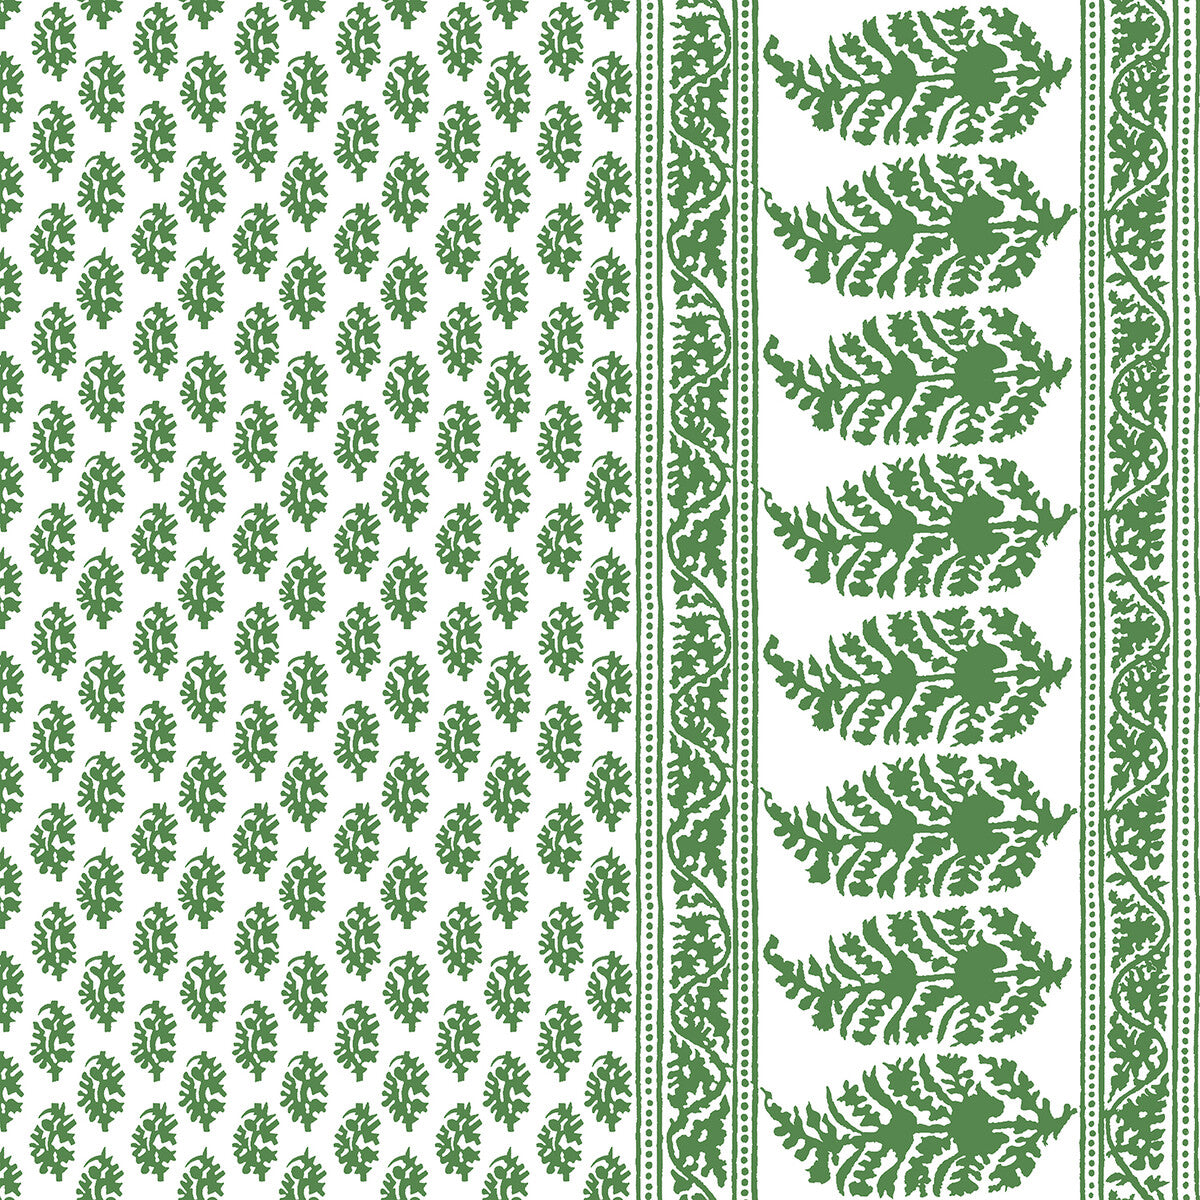 Aravaquita fabric in verde color - pattern LCT1028.001.0 - by Gaston y Daniela in the Lorenzo Castillo V collection